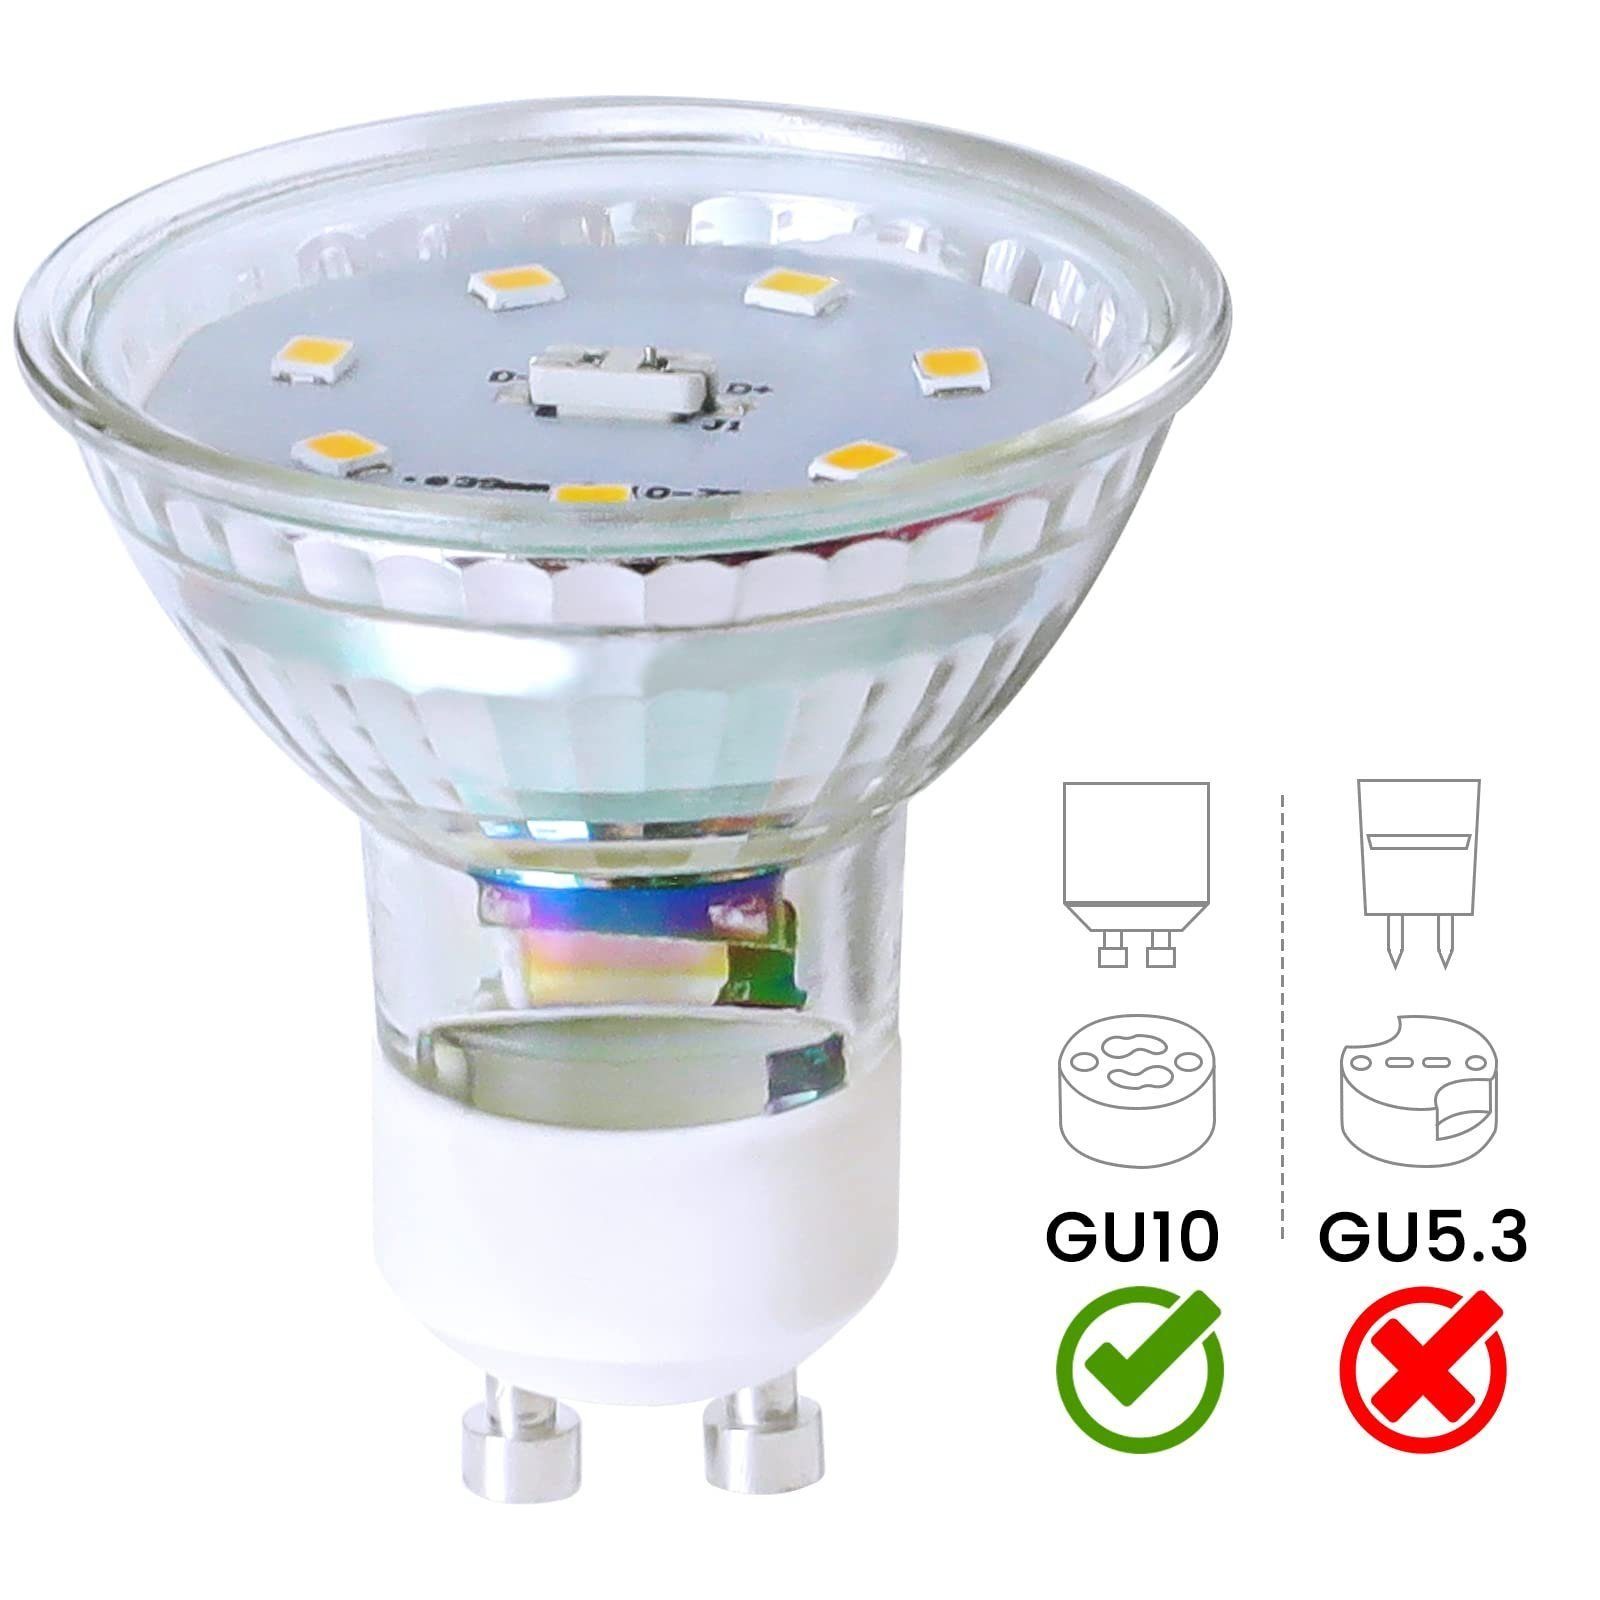 Nettlife LED-Leuchtmittel nicht GU10, 6 Neutralweiß 4.8W Glühlampe Energiesparlampe St., dimmbar, Abstrahlwinkel 110° LED